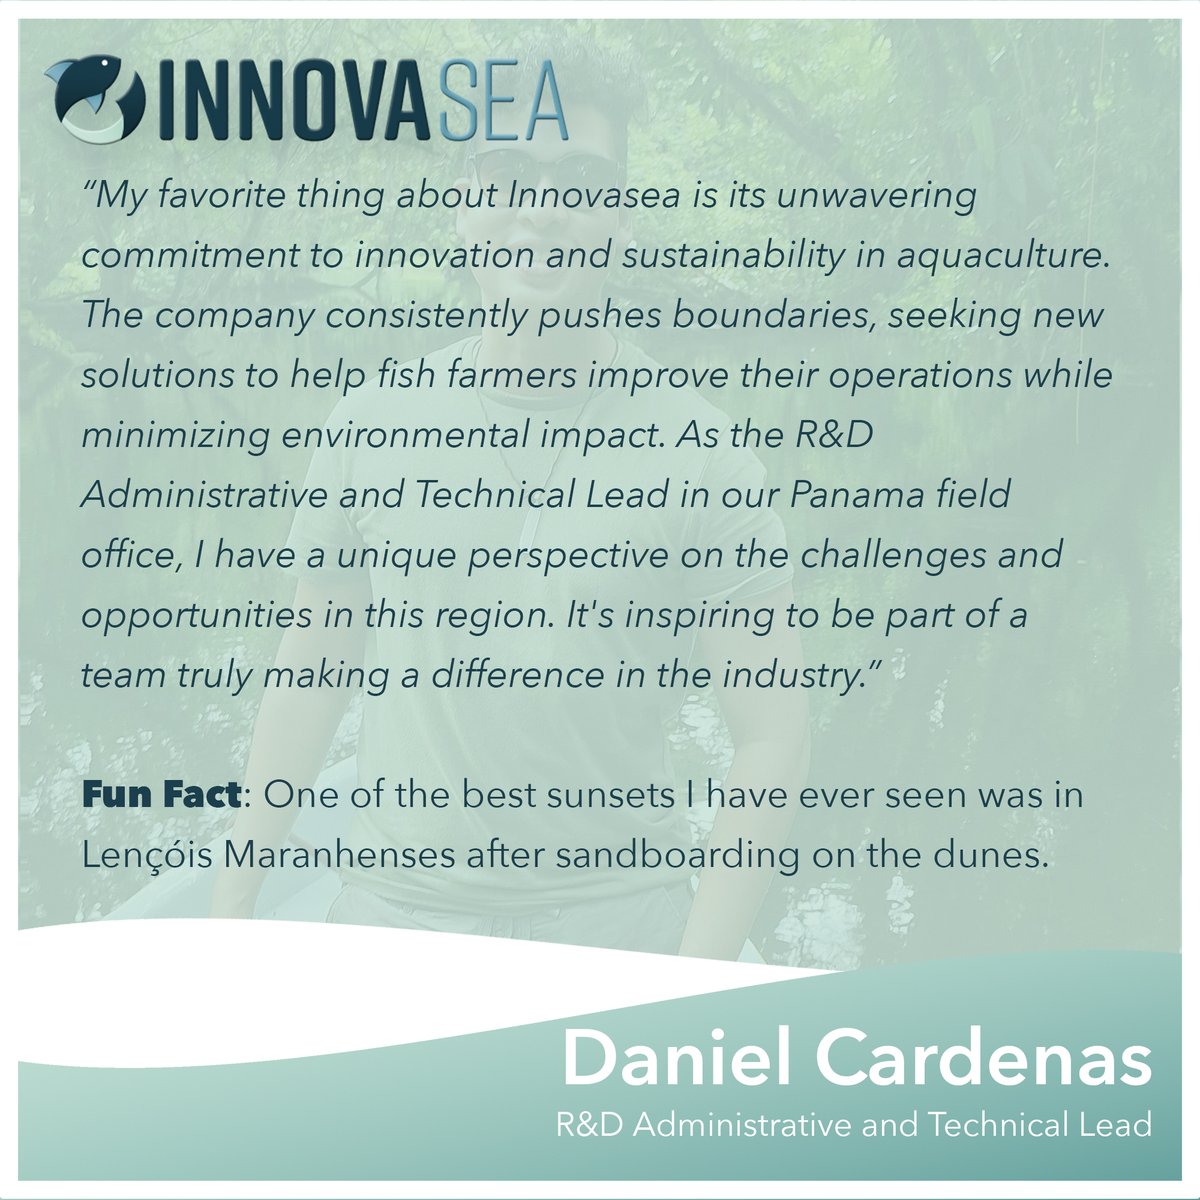 Meet Daniel Cardenas, our sunset chasing R&D Administrative and Technical Lead. #InnovaseaSpotlight